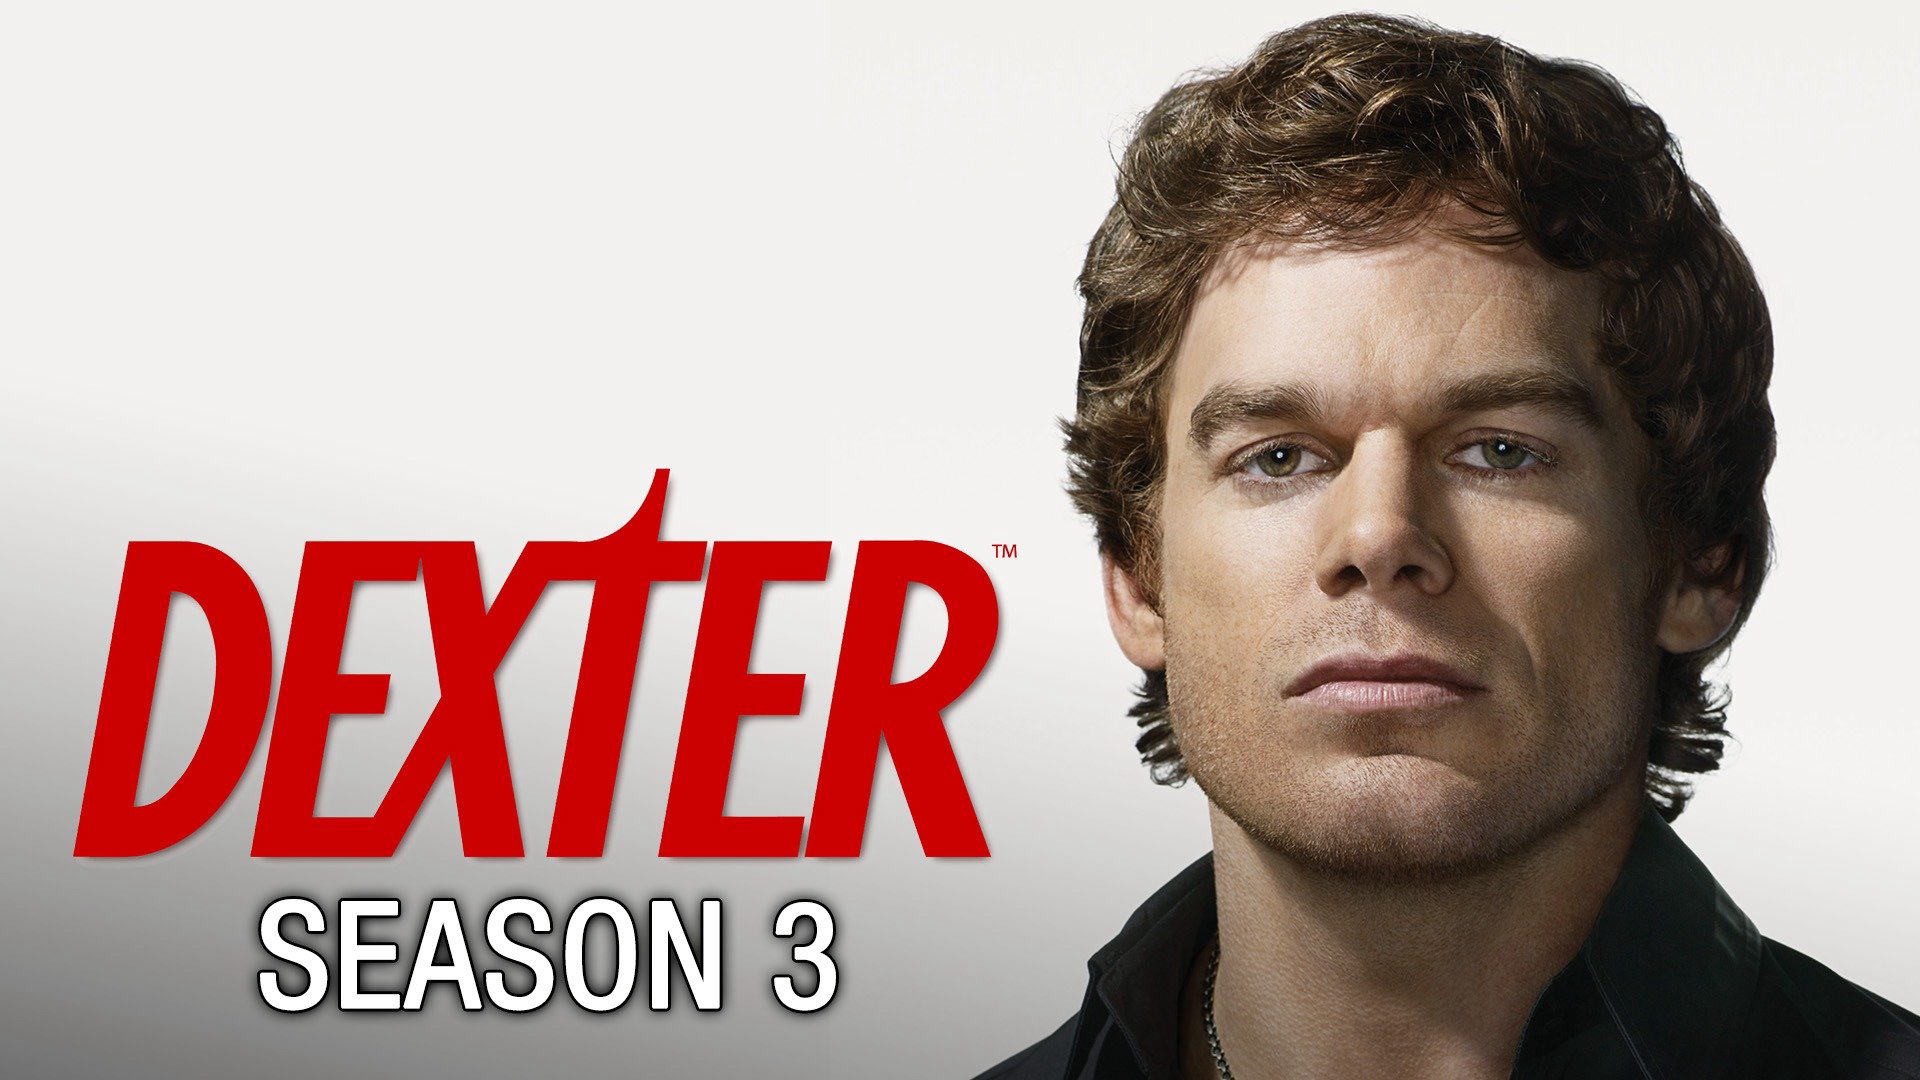 Thiên Thần Khát Máu (Phần 3) - Dexter (Season 3) (2008)